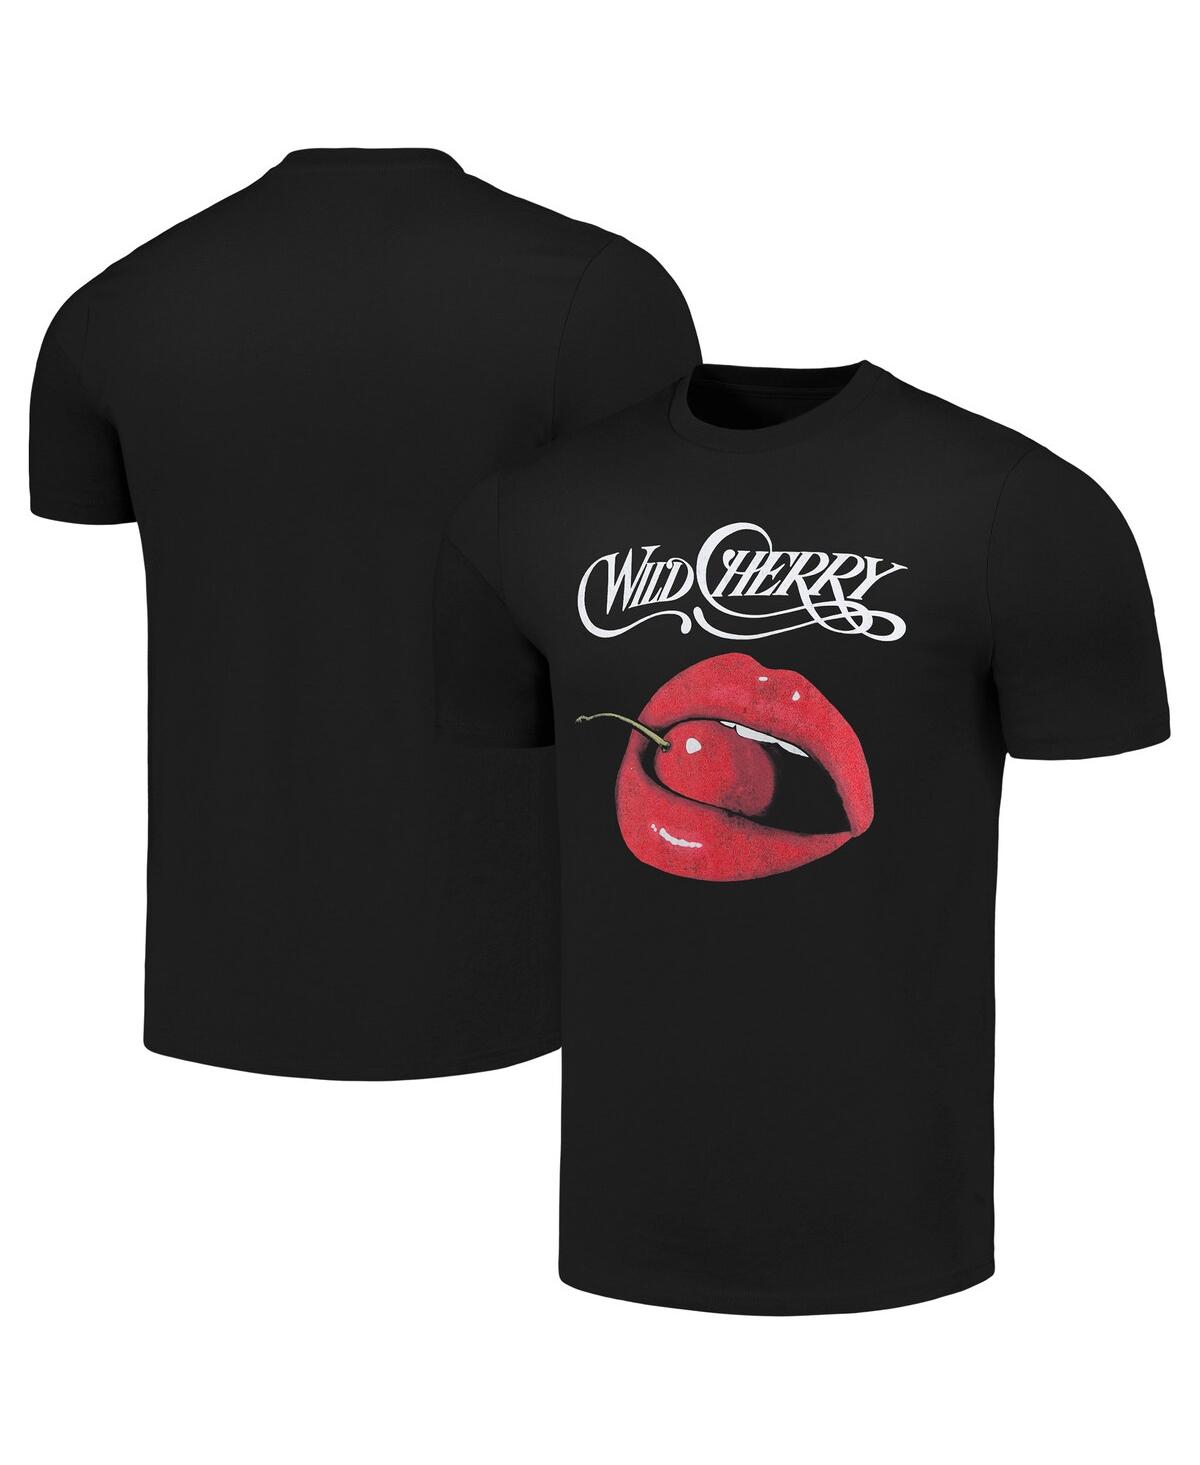 American Classics Men's Black Wild Cherry Bite T-shirt